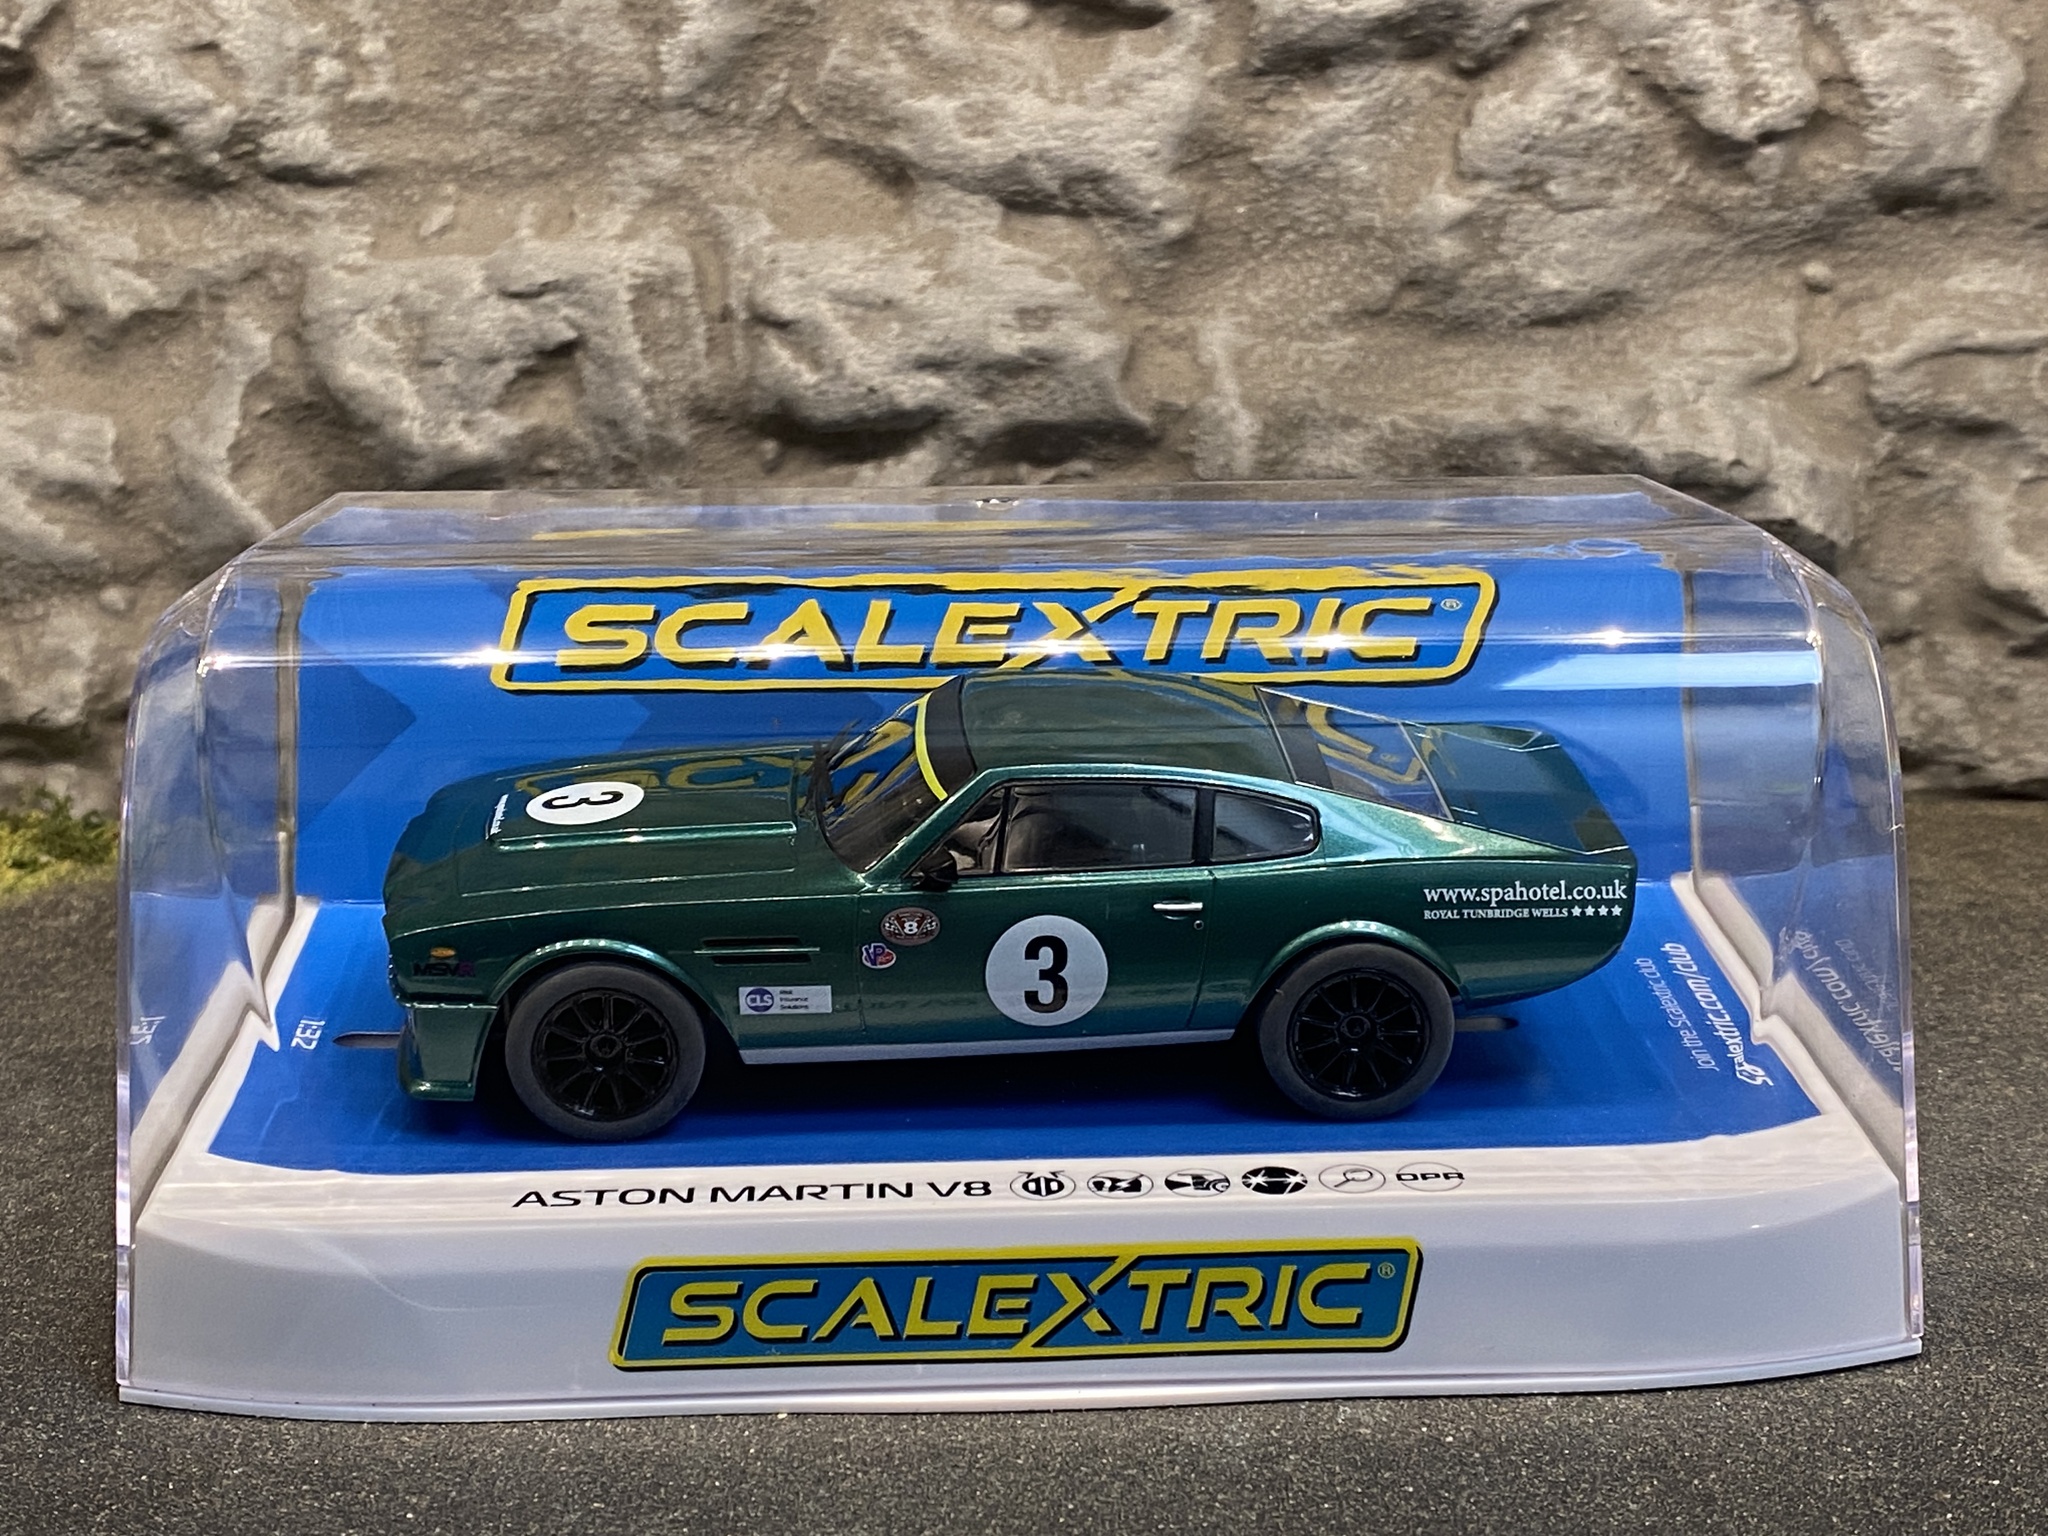 Skala 1/32 Scalextric Bil t Bilbana: Aston Martin V8 - Chris Scragg Racing, Green